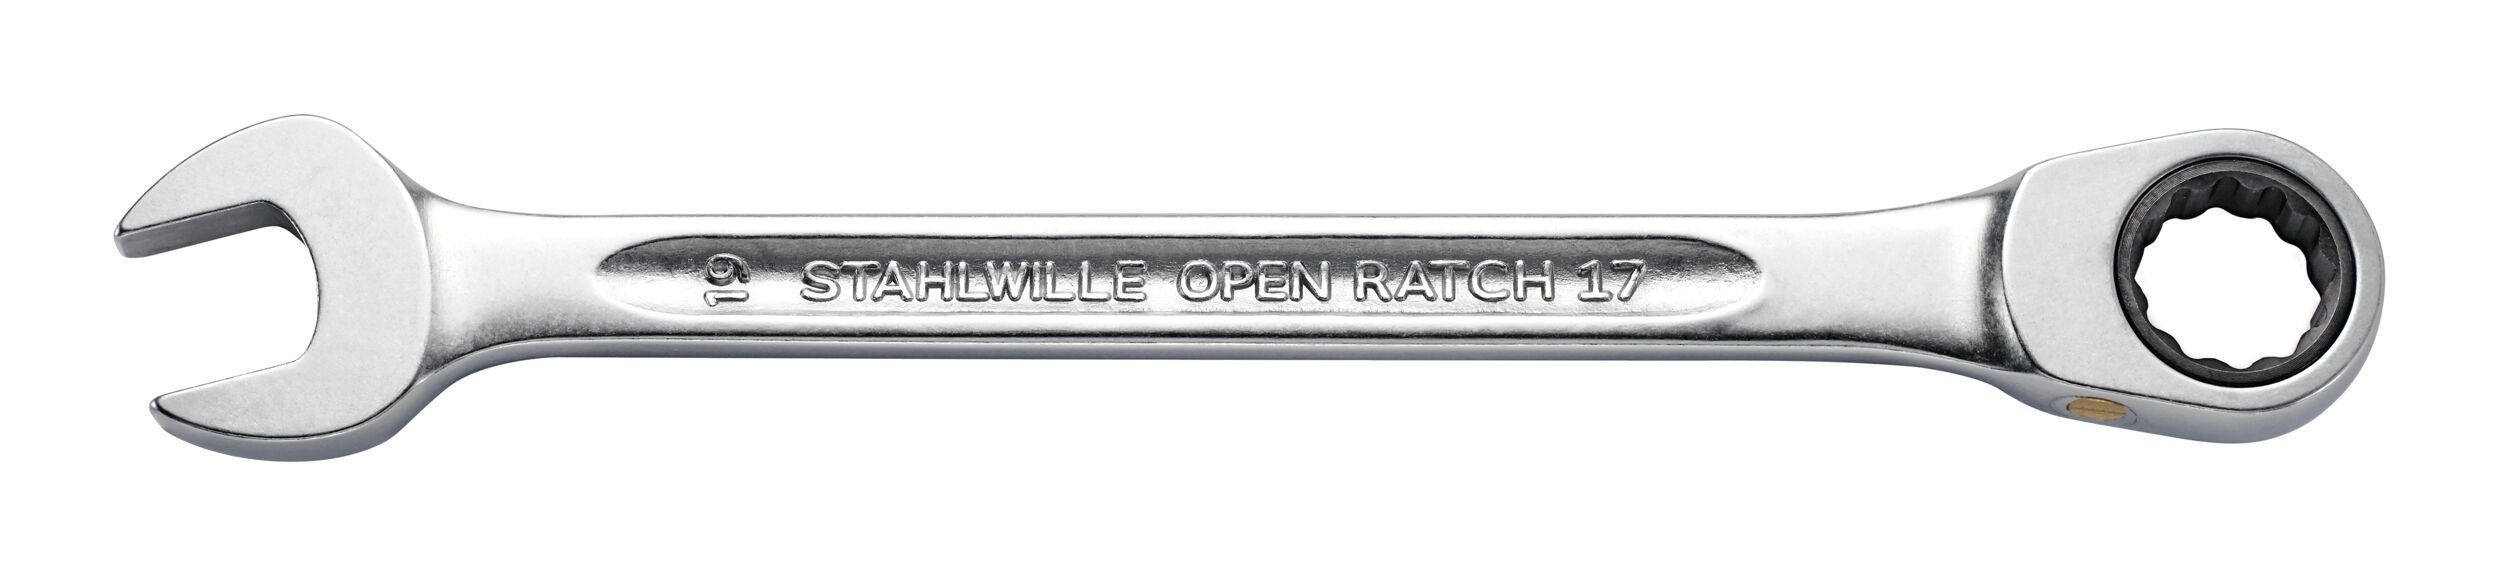 Stahlwille Ratschenringschlüssel, Maul-Ringratschen-Schlüssel gerade 15 mm